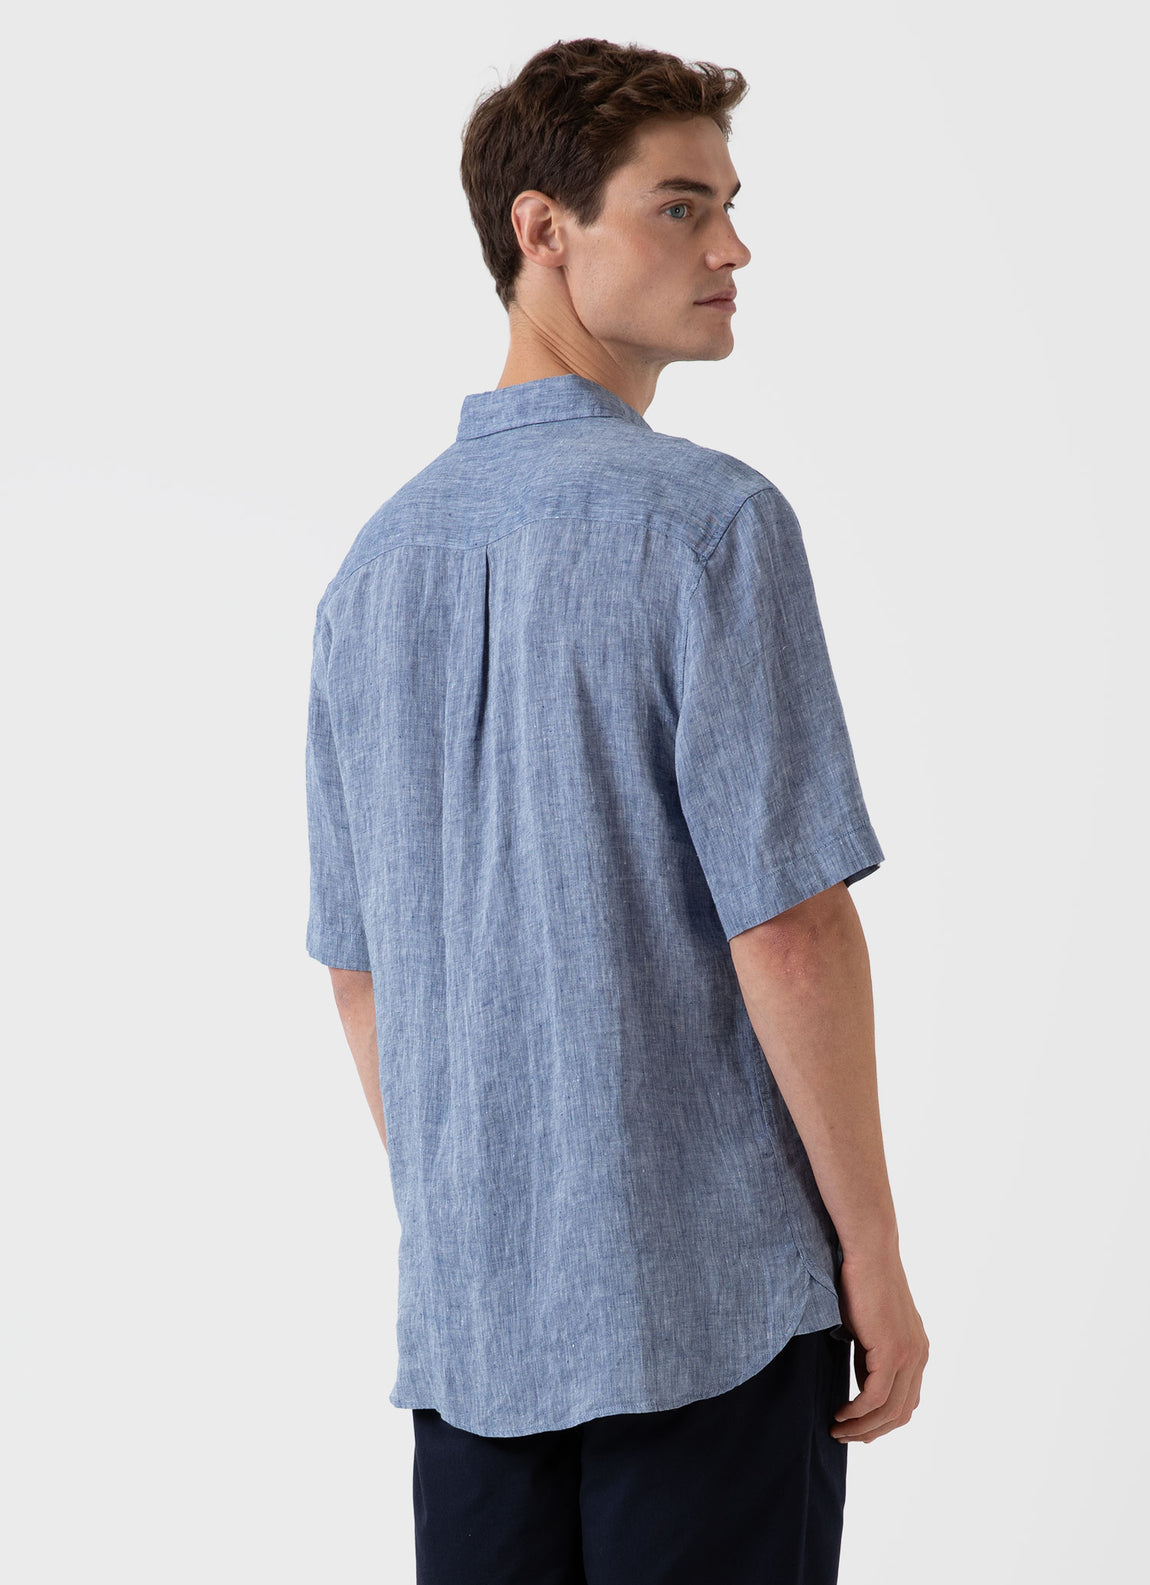 Men's Short Sleeve Linen Shirt in Bluestone Melange